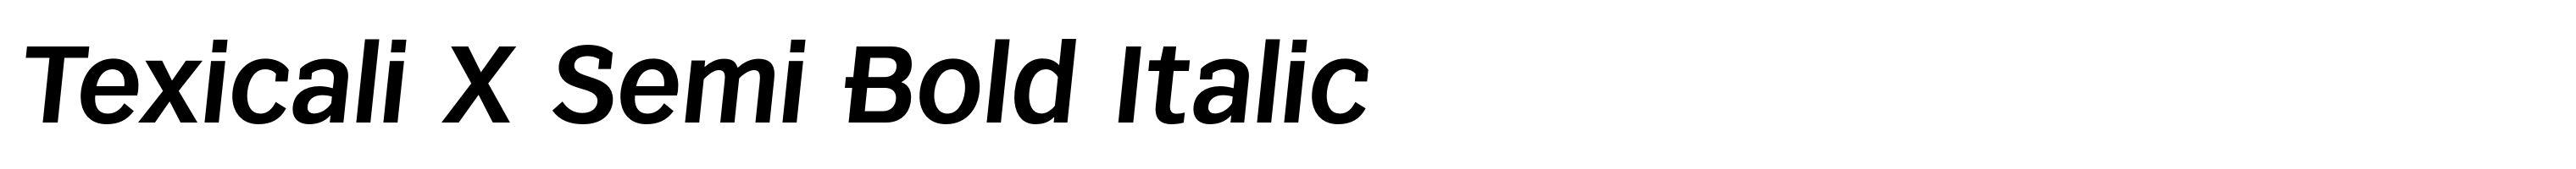 Texicali X Semi Bold Italic